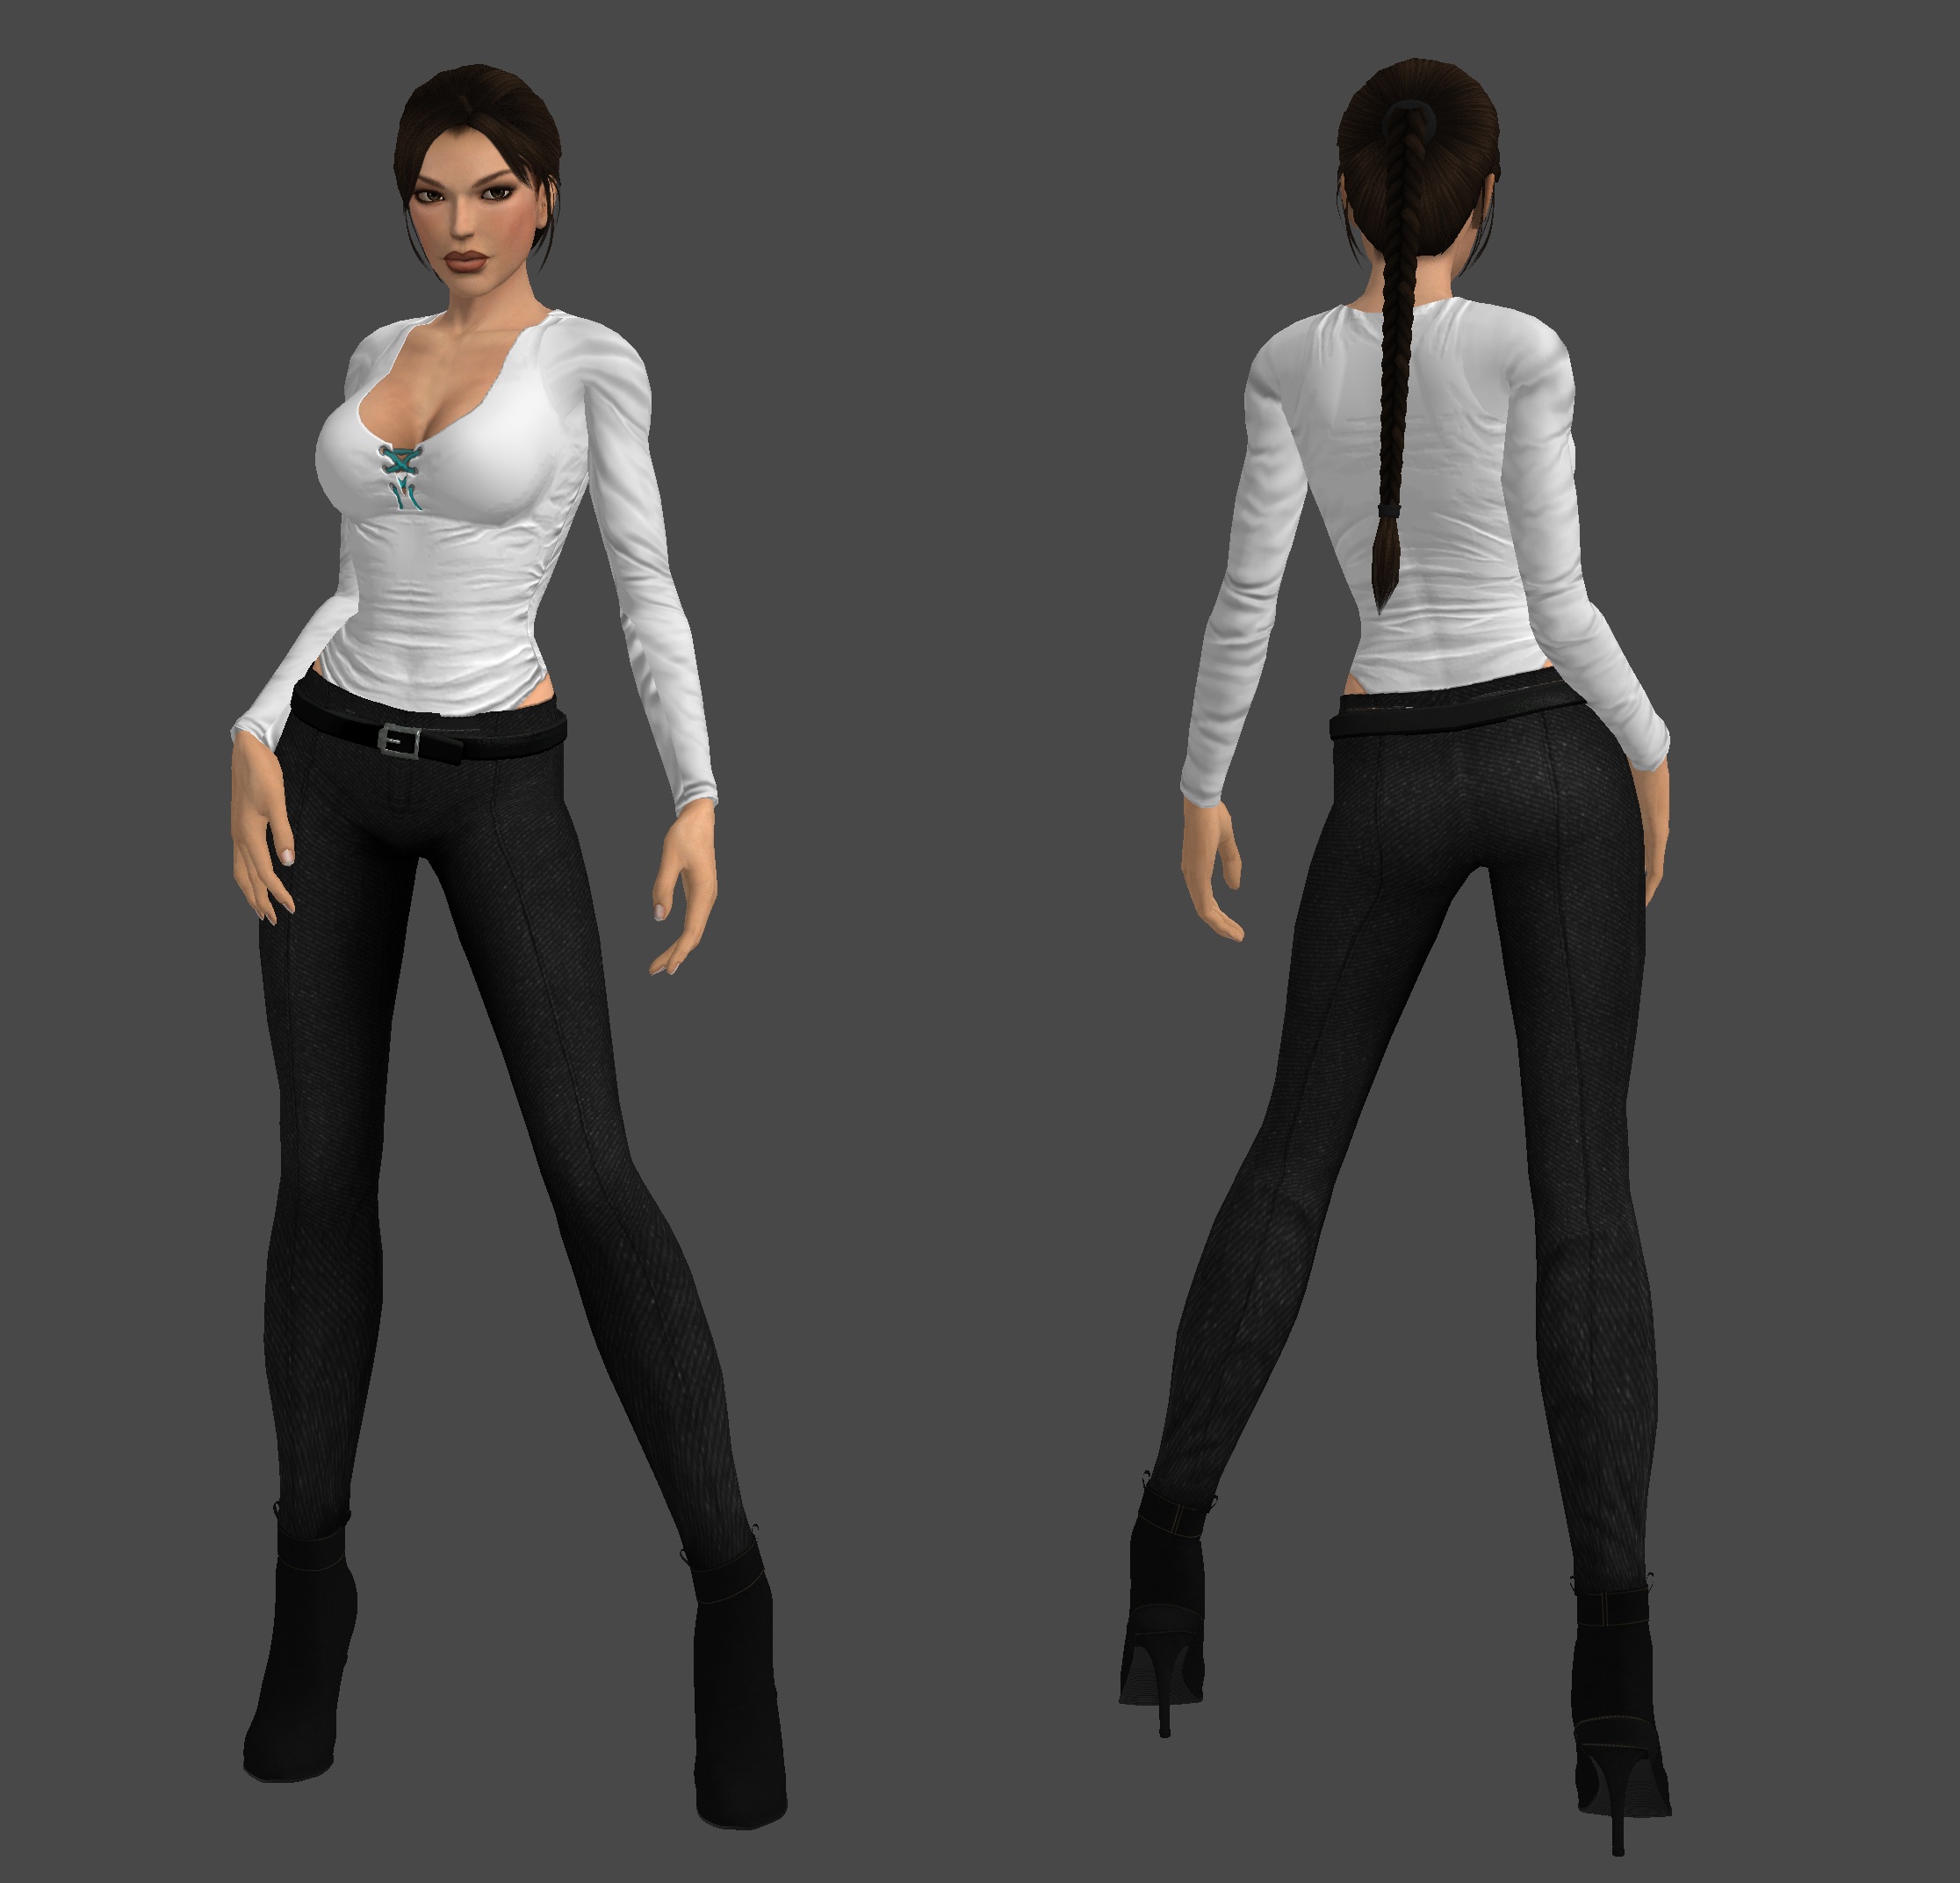 Lara Croft Fashion Casual Outfit by spuros12.